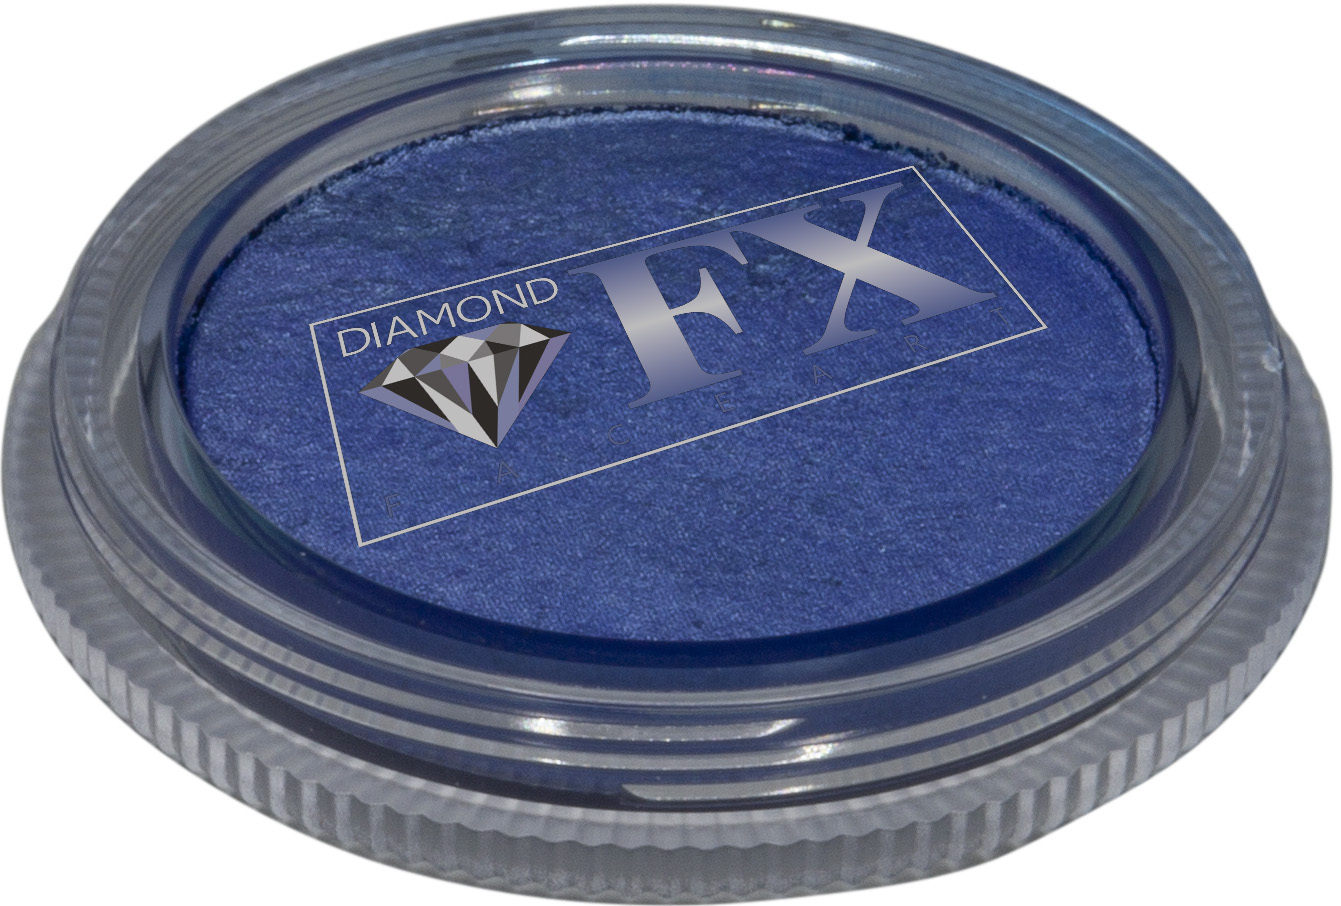 Diamond FX Blue Metallic 30g - Small Image